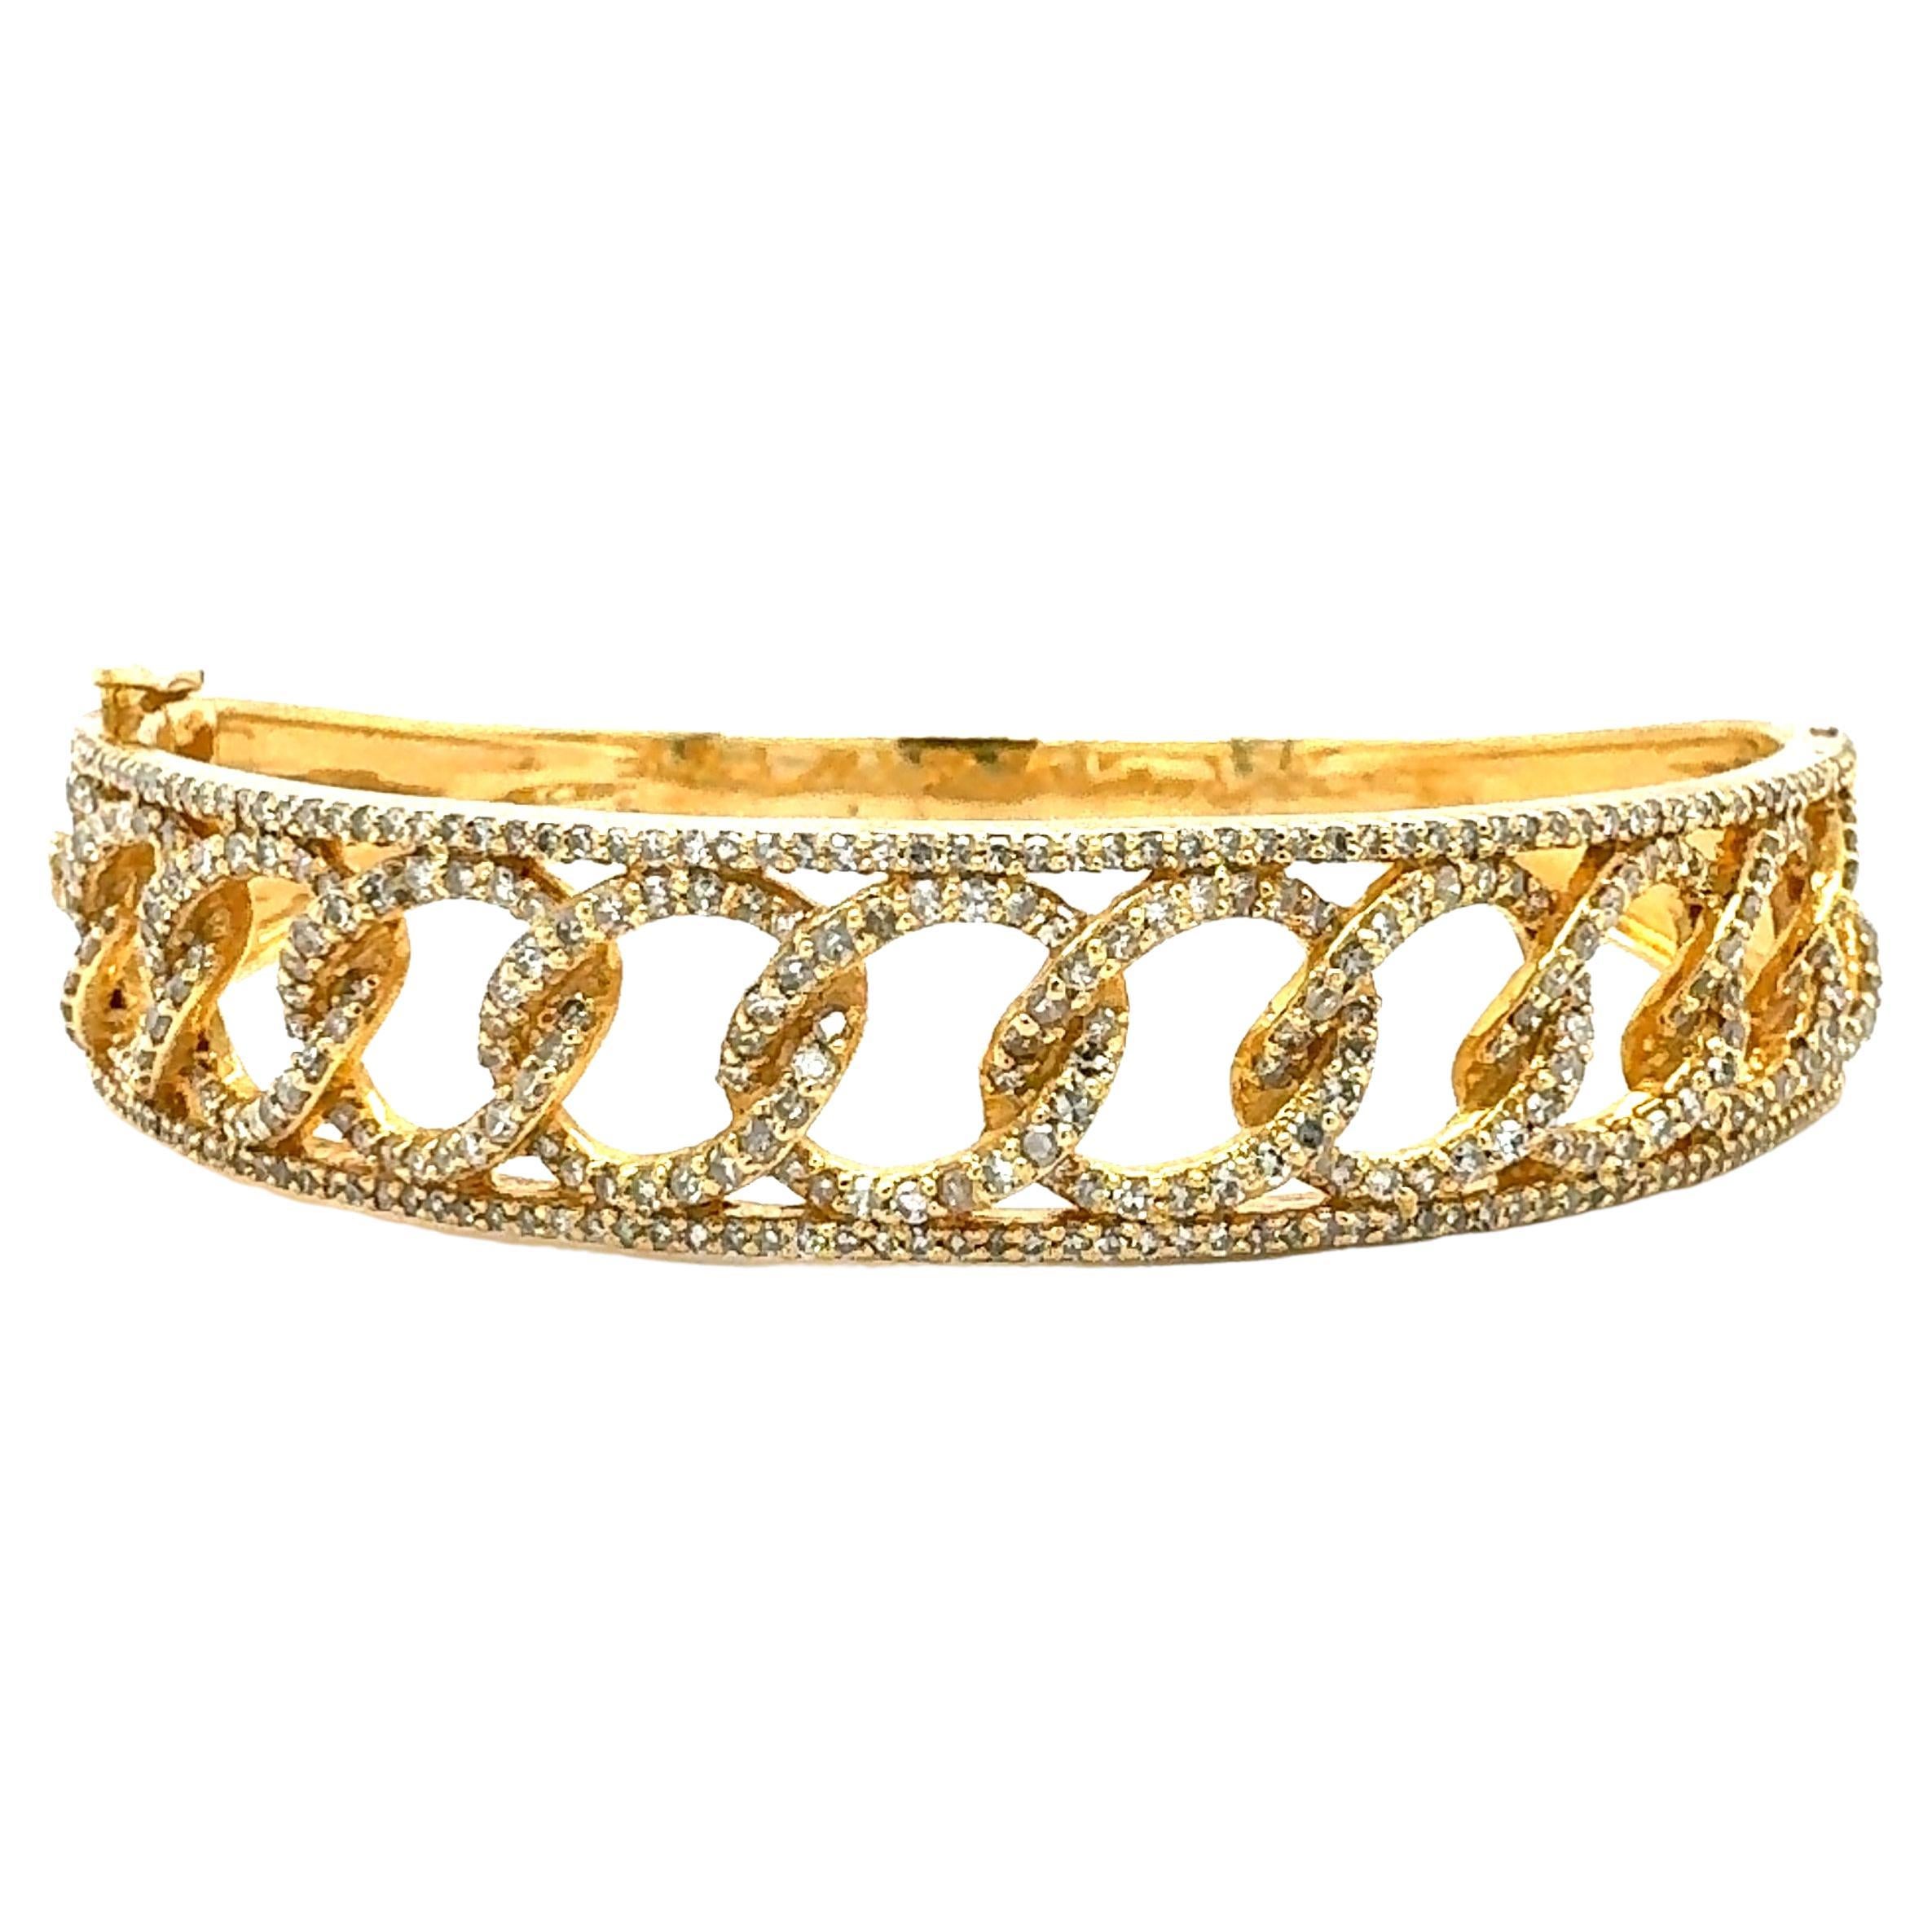 Natural diamond bangle bracelet